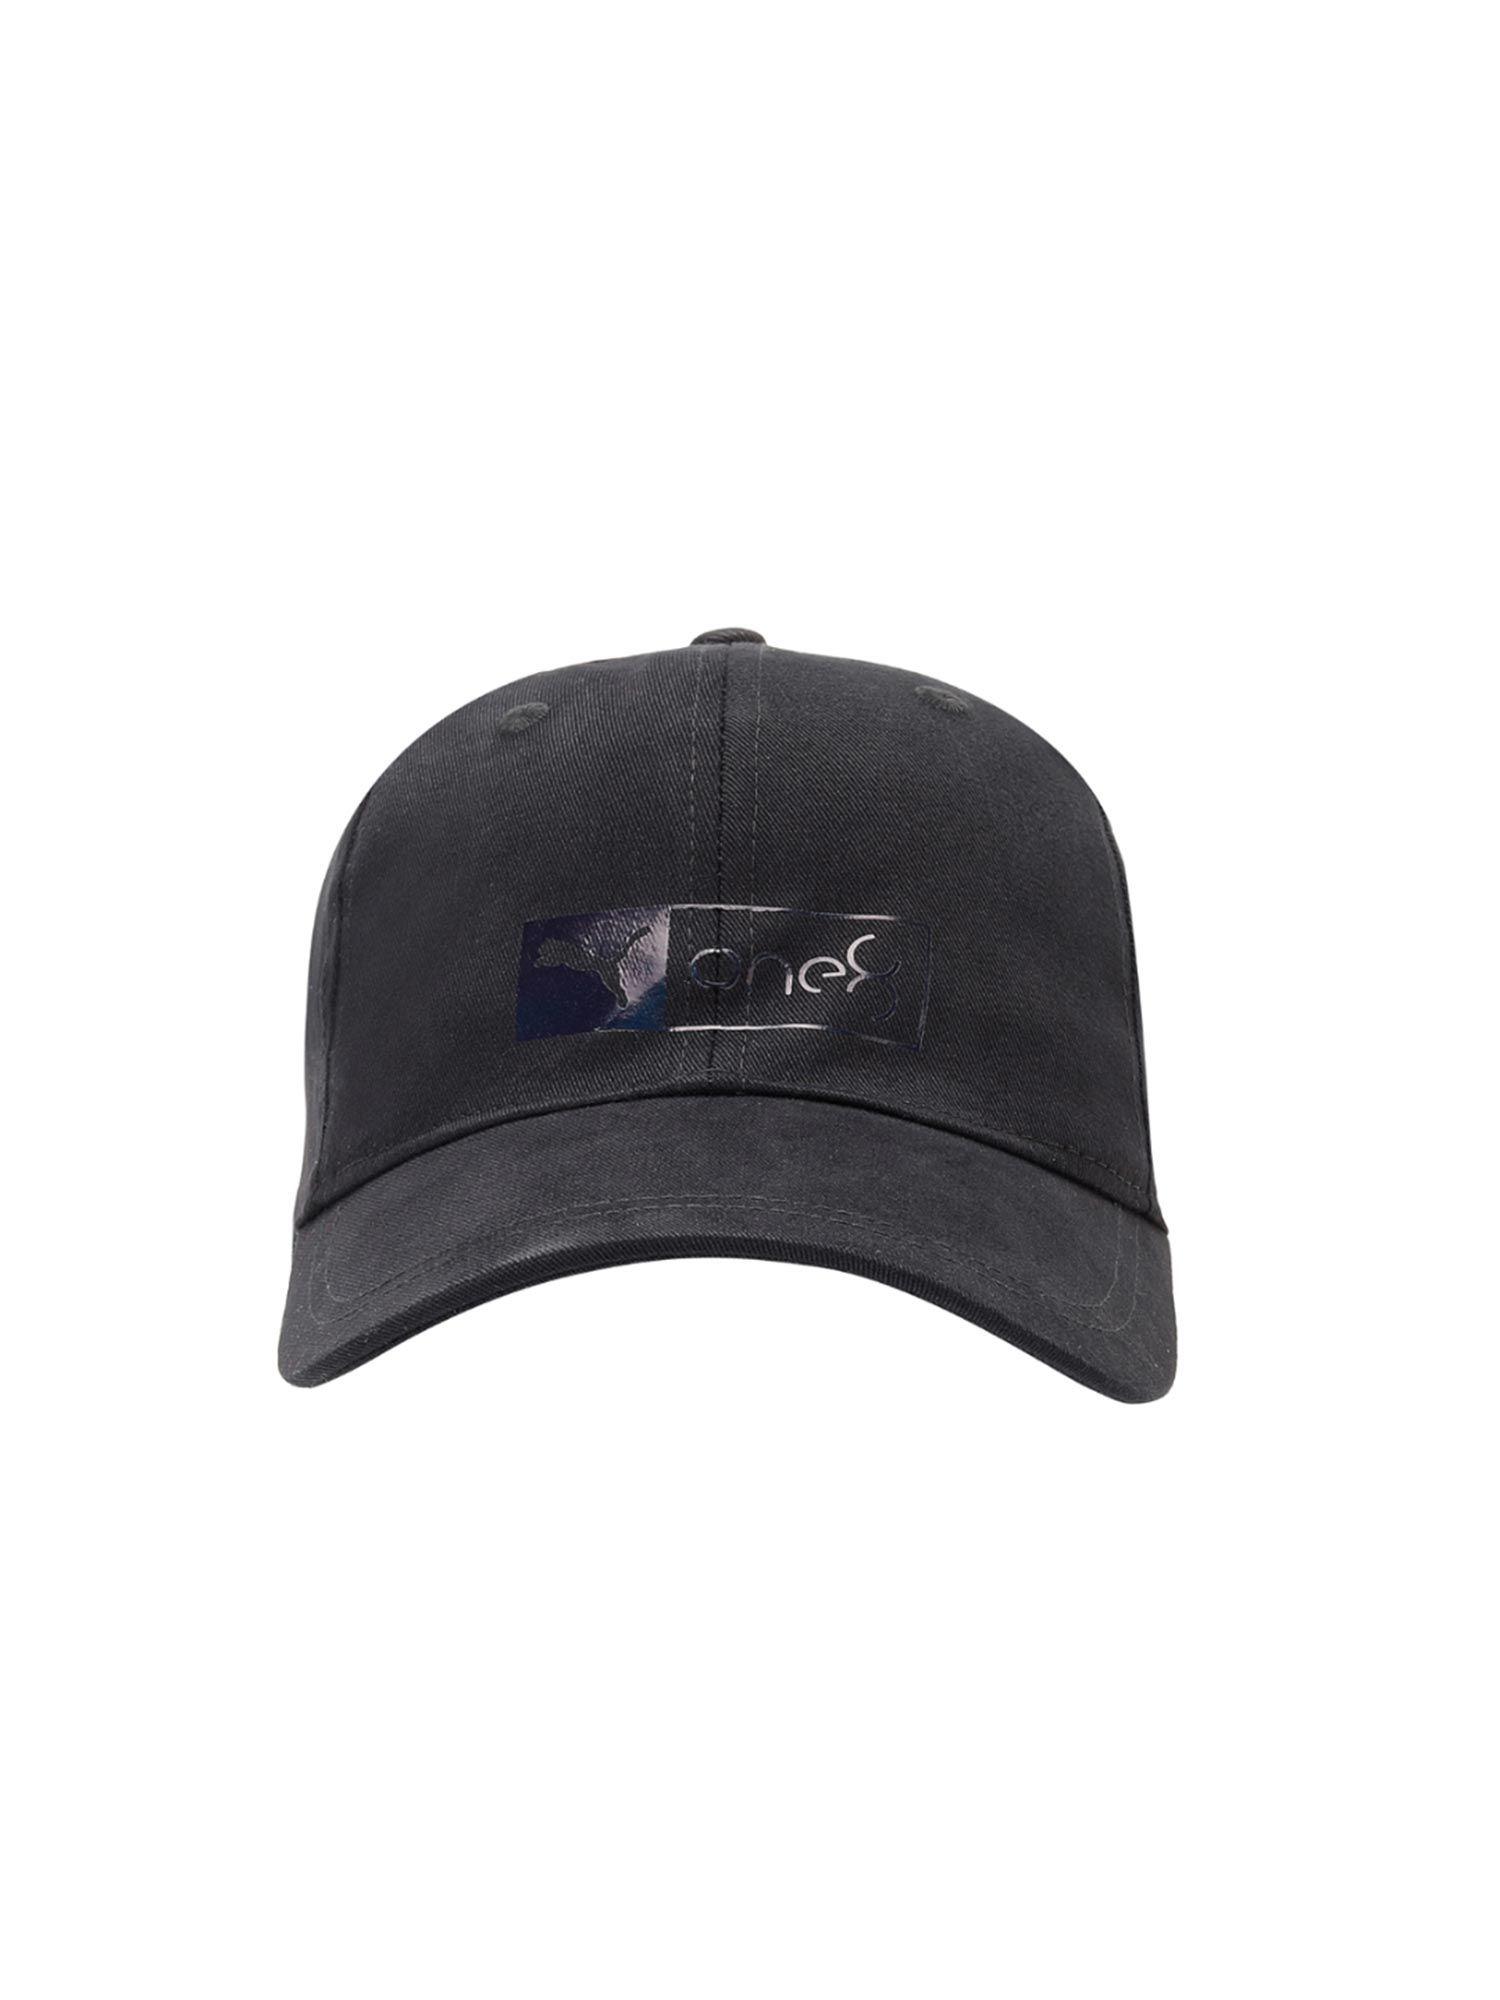 x one8 stretchfit cap v2 black